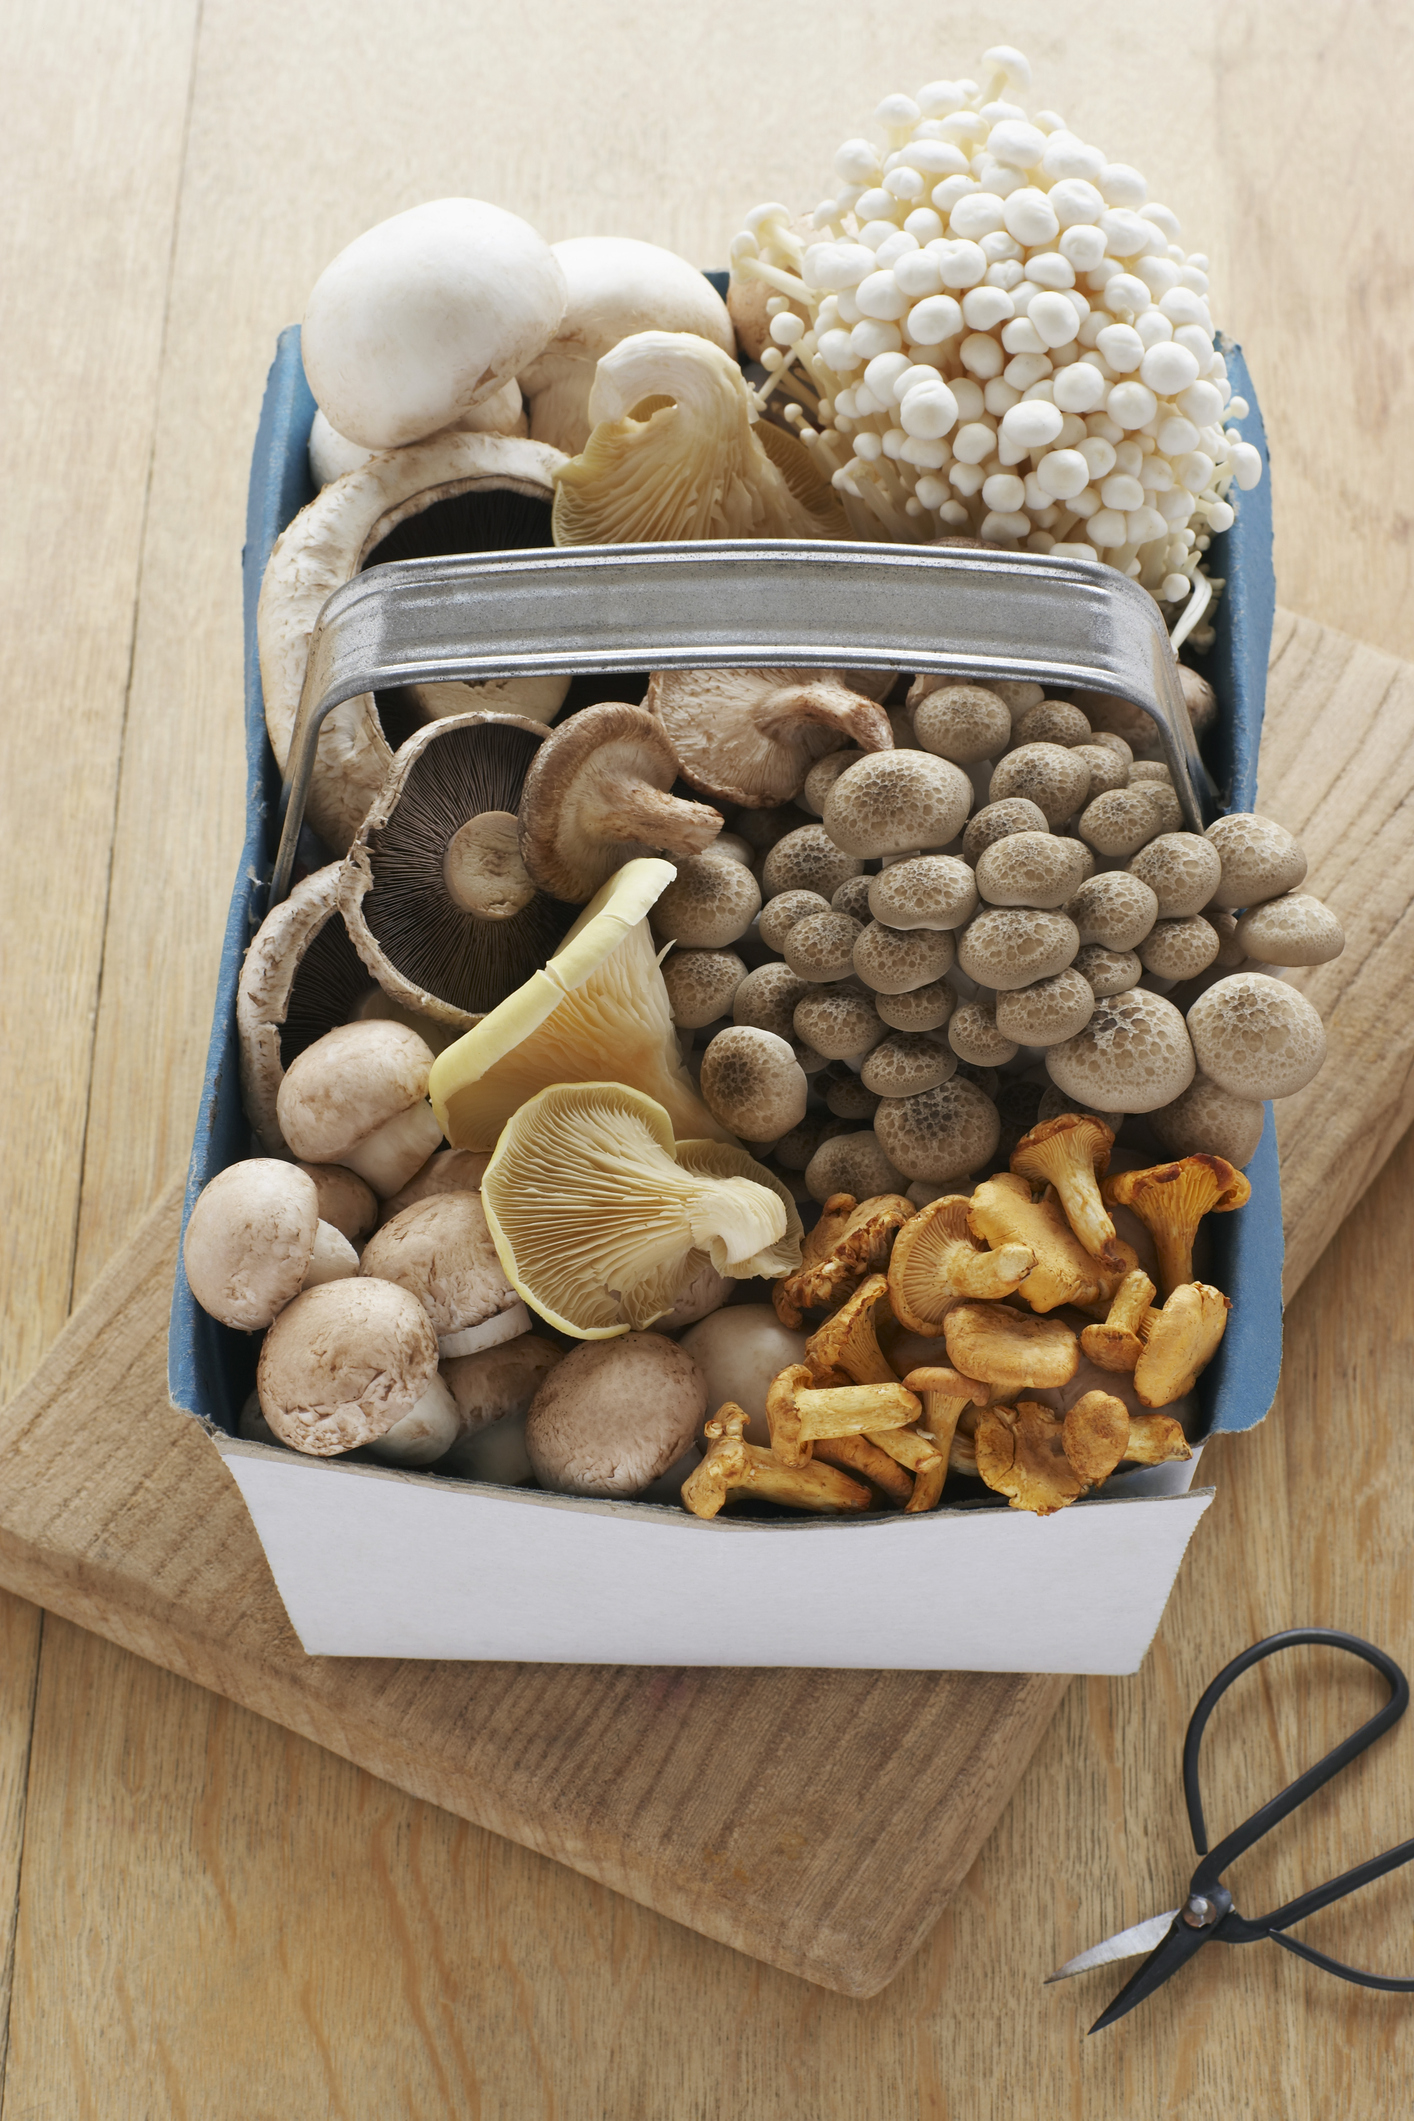 An assortment of mushrooms in a basket